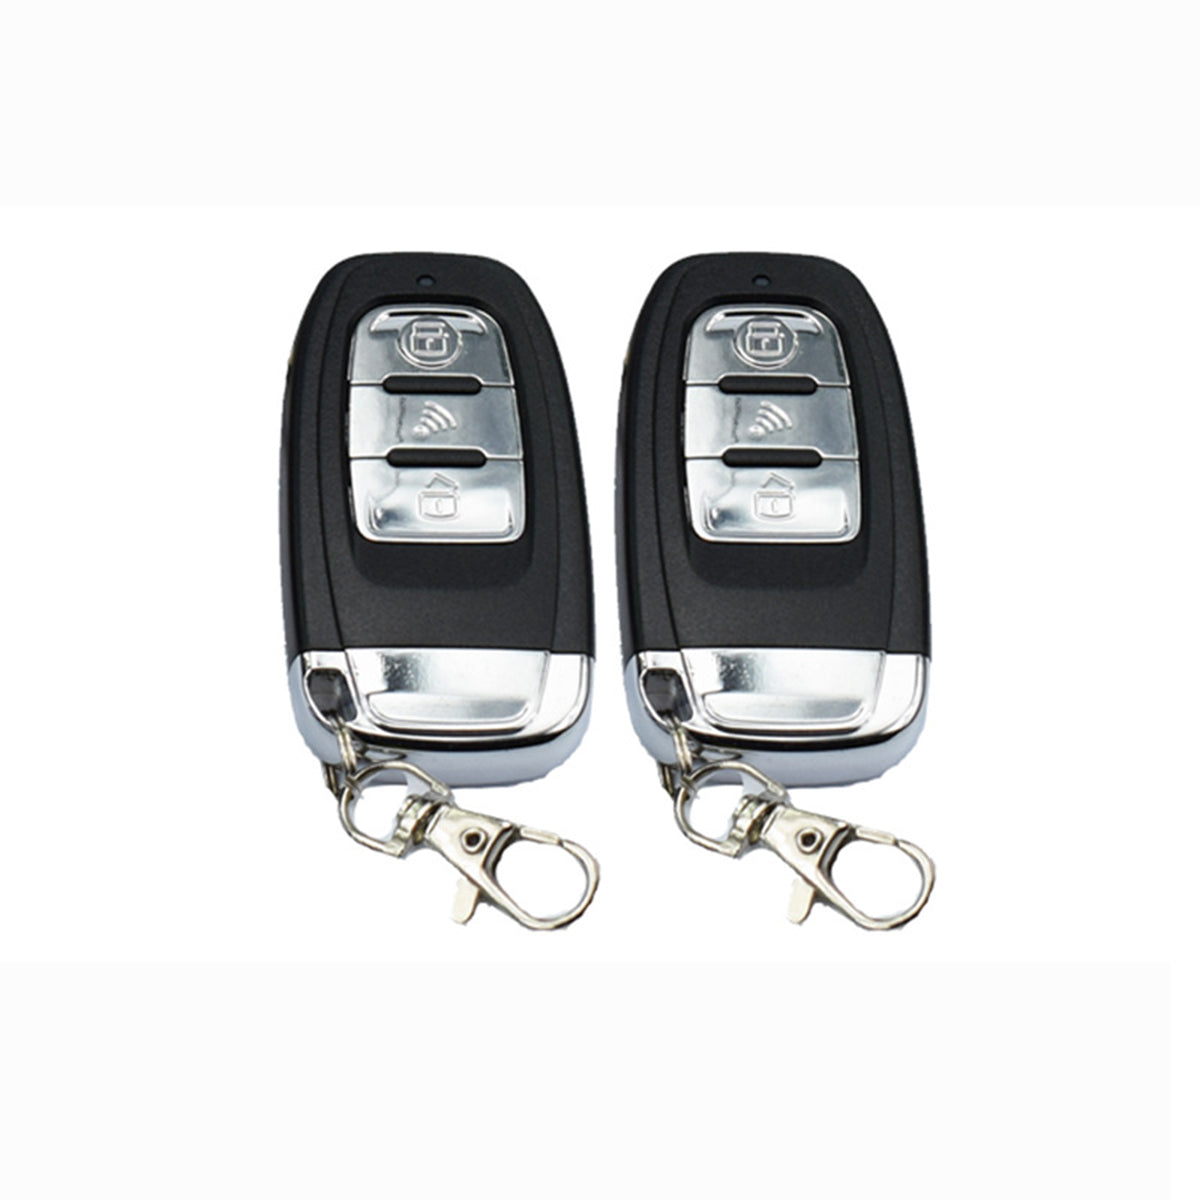 Dark Slate Gray Car Alarm System PKE Keyless Entry Push Button Engine Ignition Start Remote